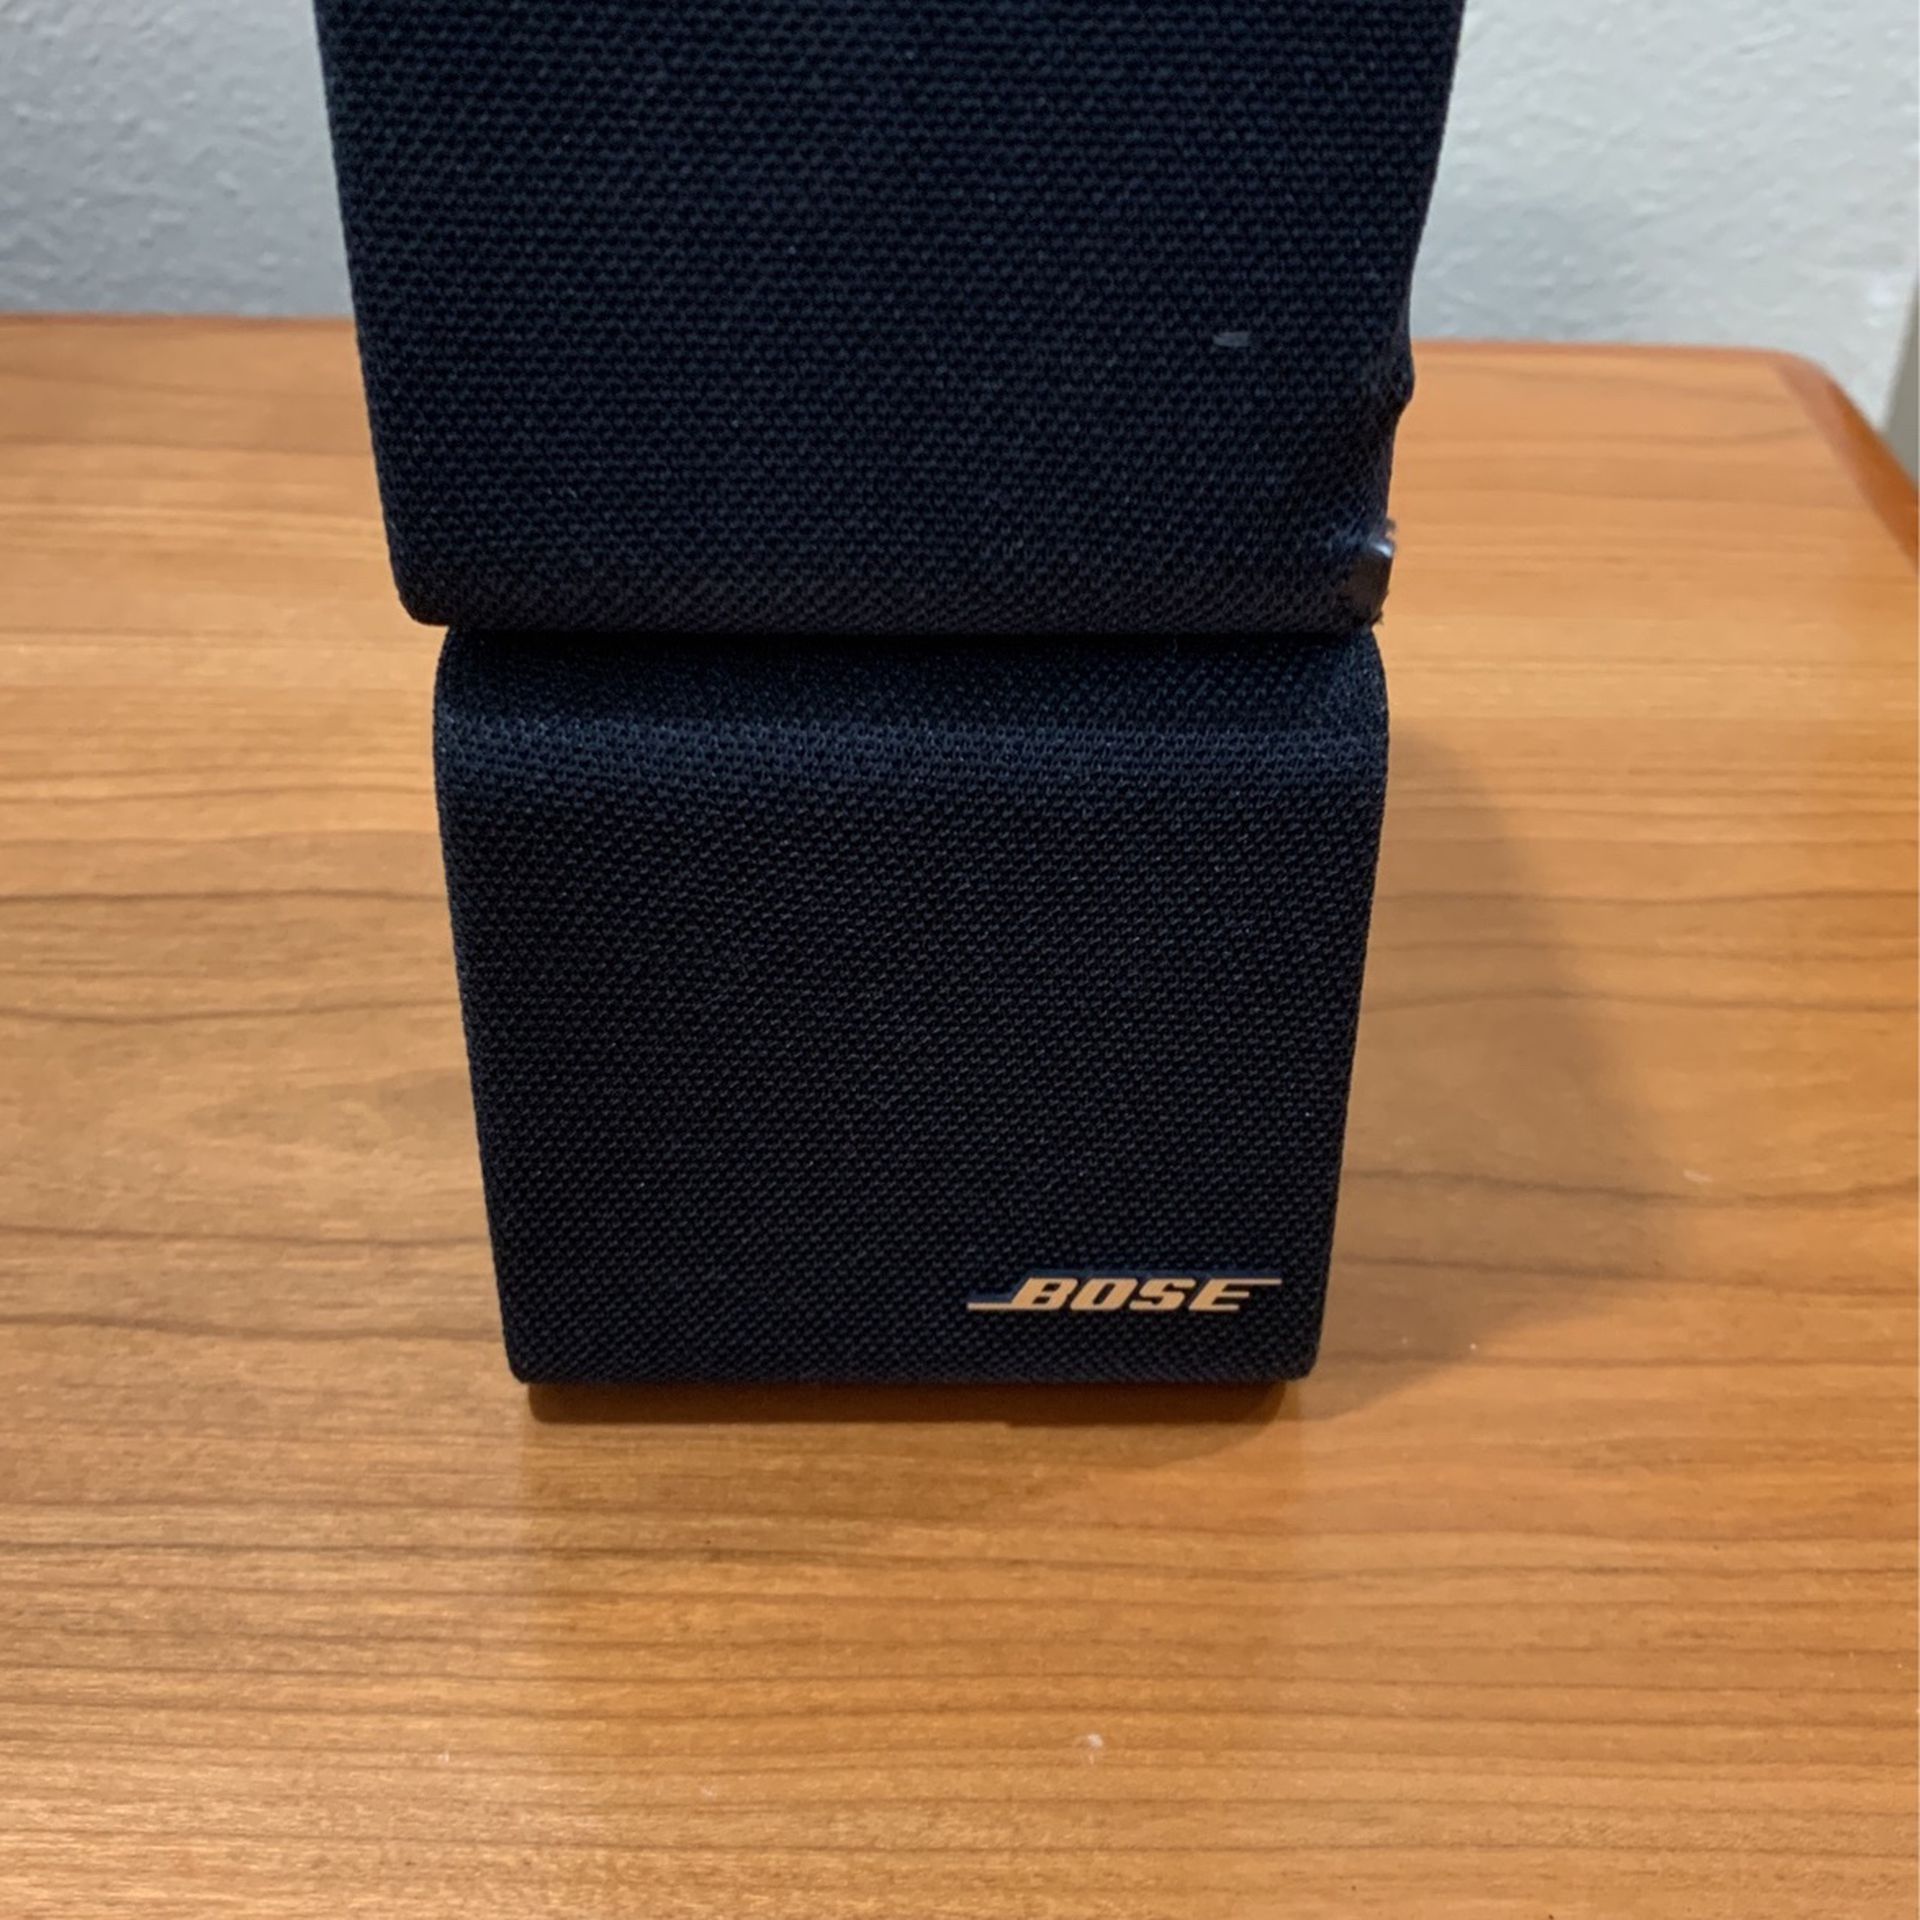 1 Bose Cube Speaker